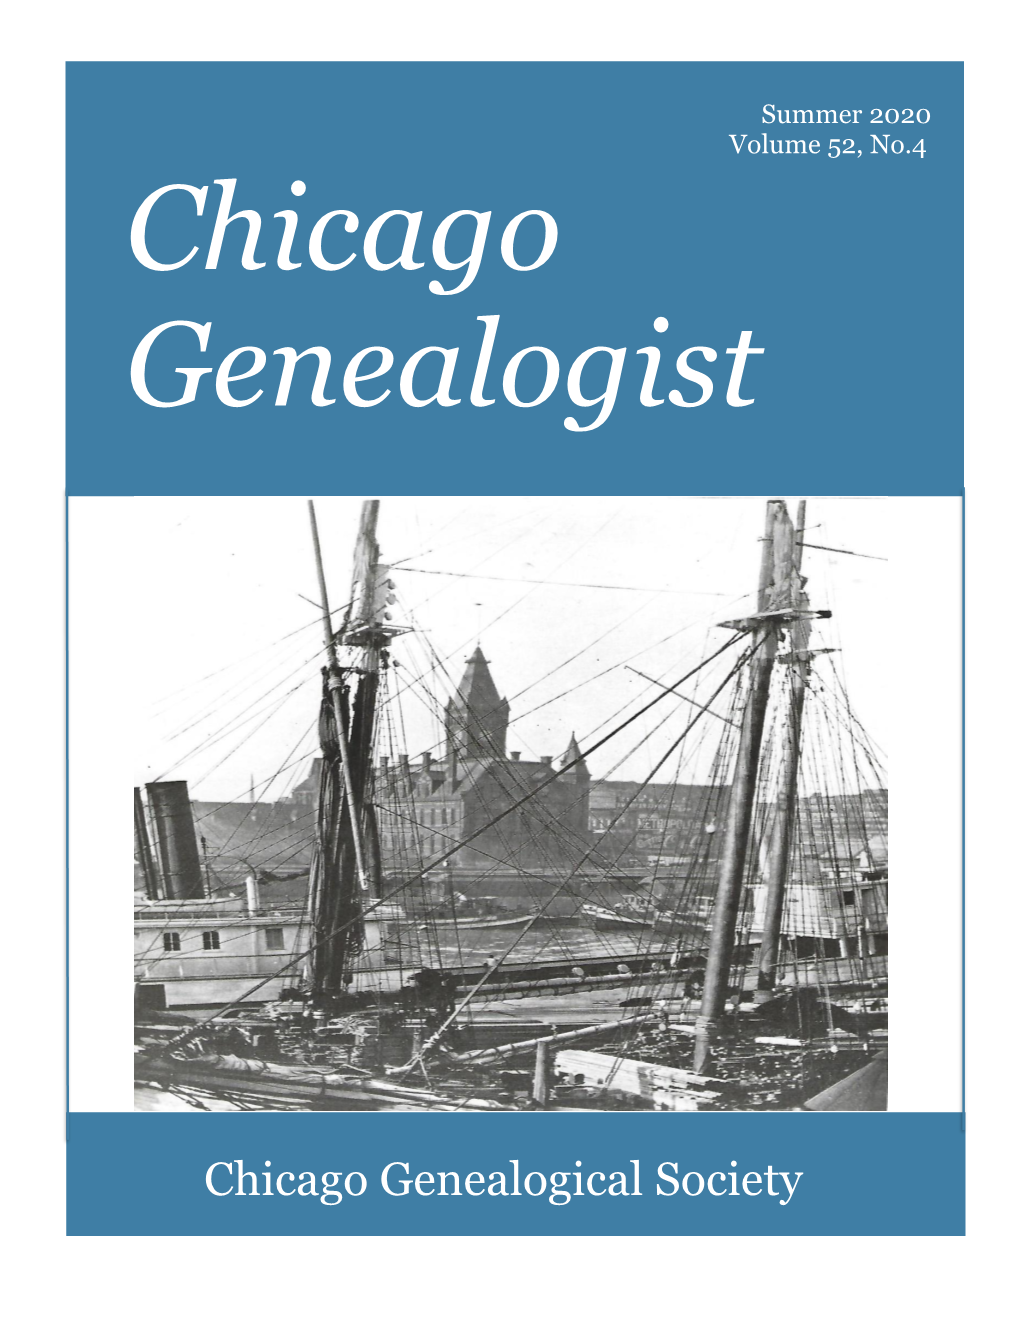 Chicago Genealogist